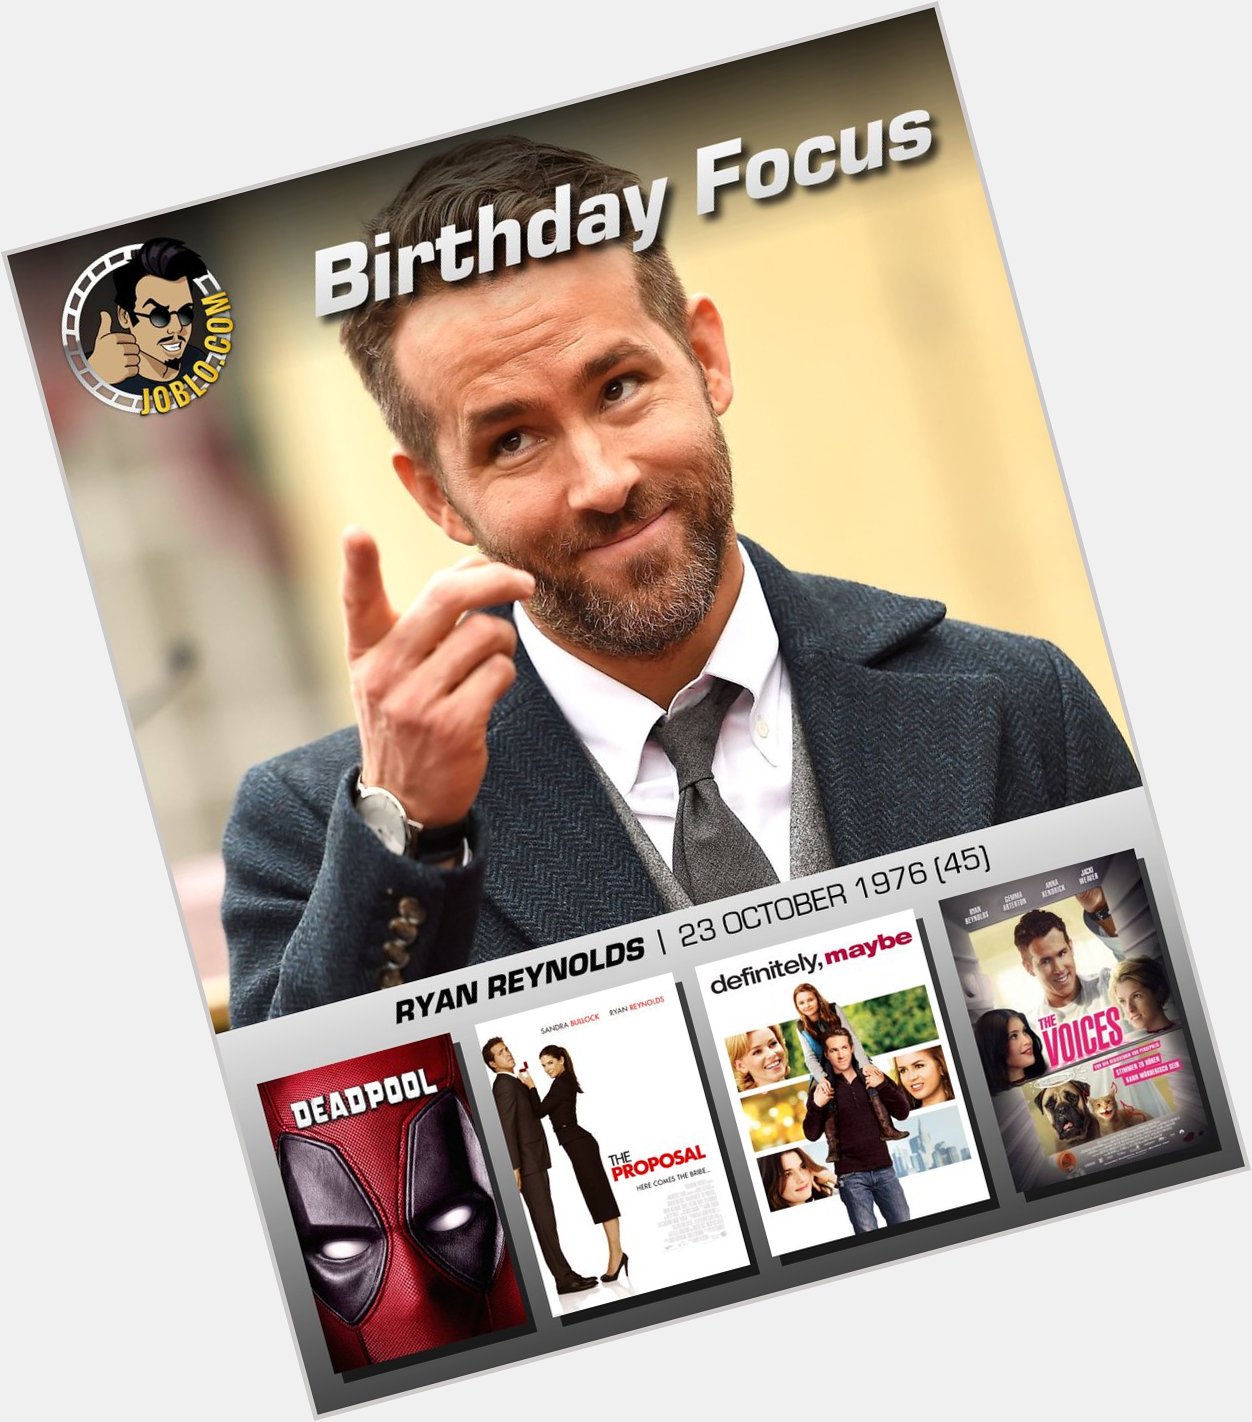 Wishing a very happy 45th birthday to Ryan Reynolds! 